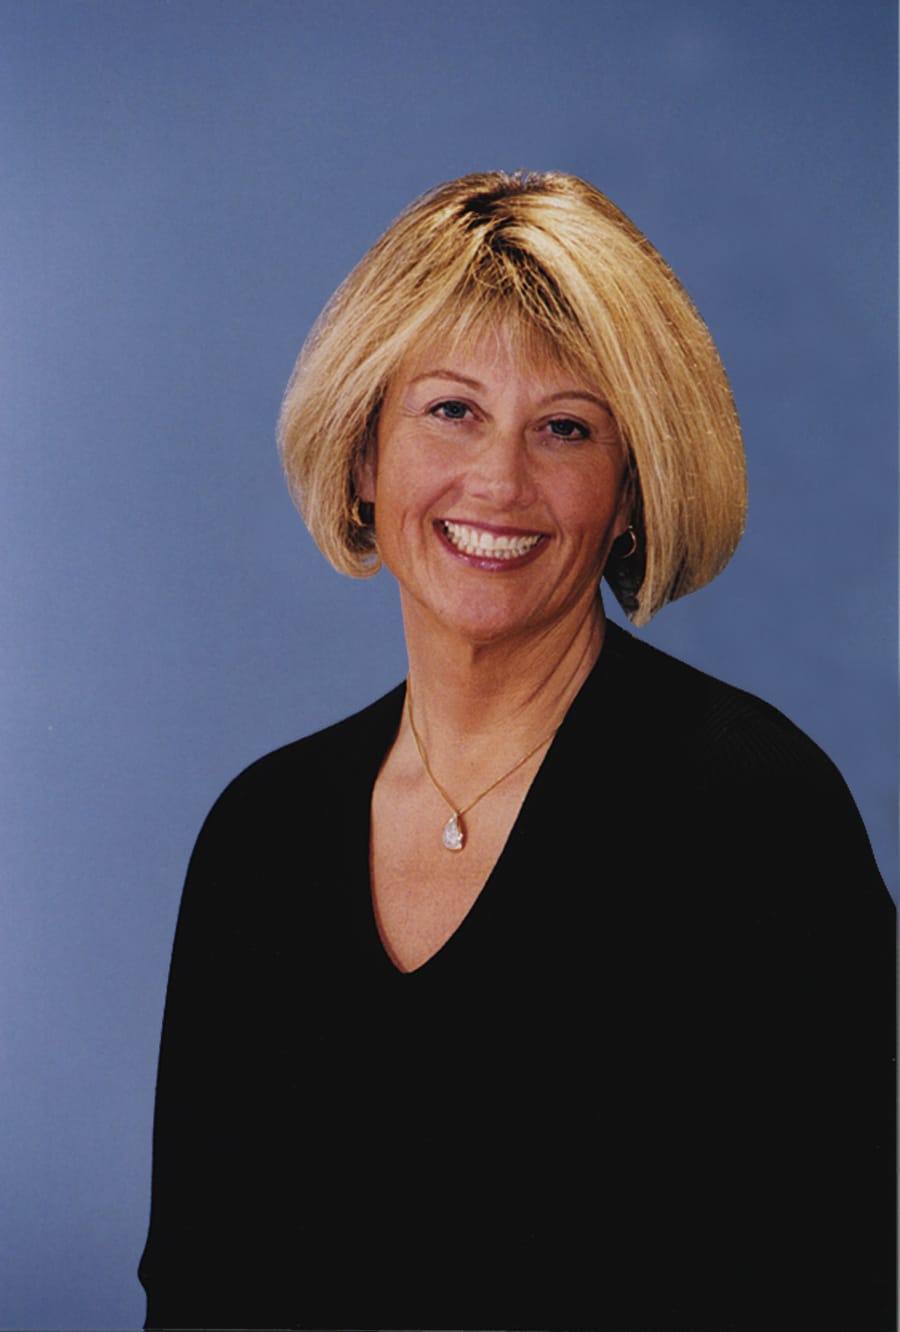 Director of Oregon's Early Learning System Jada Rupley